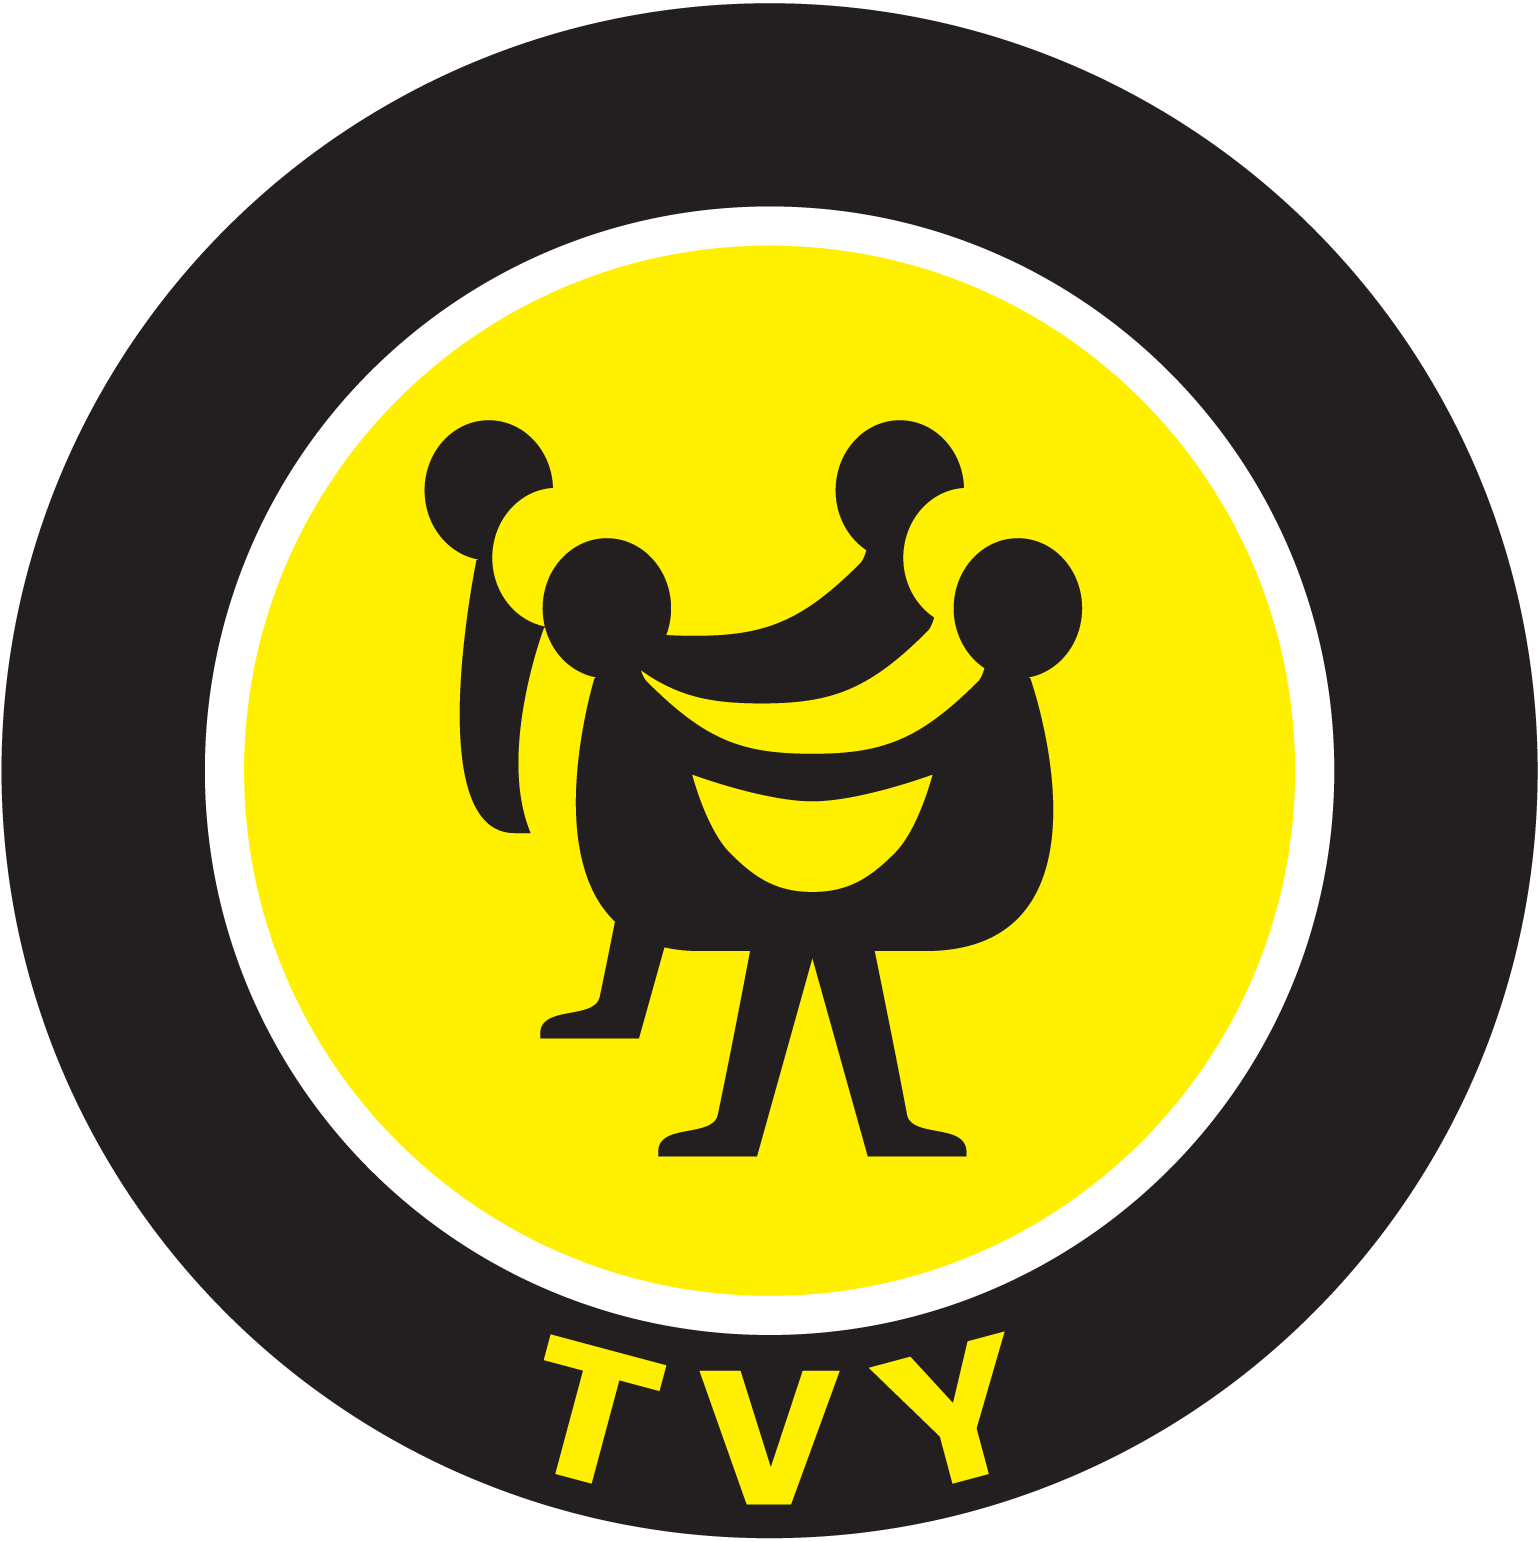 Tvy Logo - TVY logo png - Työttömien Keskusjärjestö ry